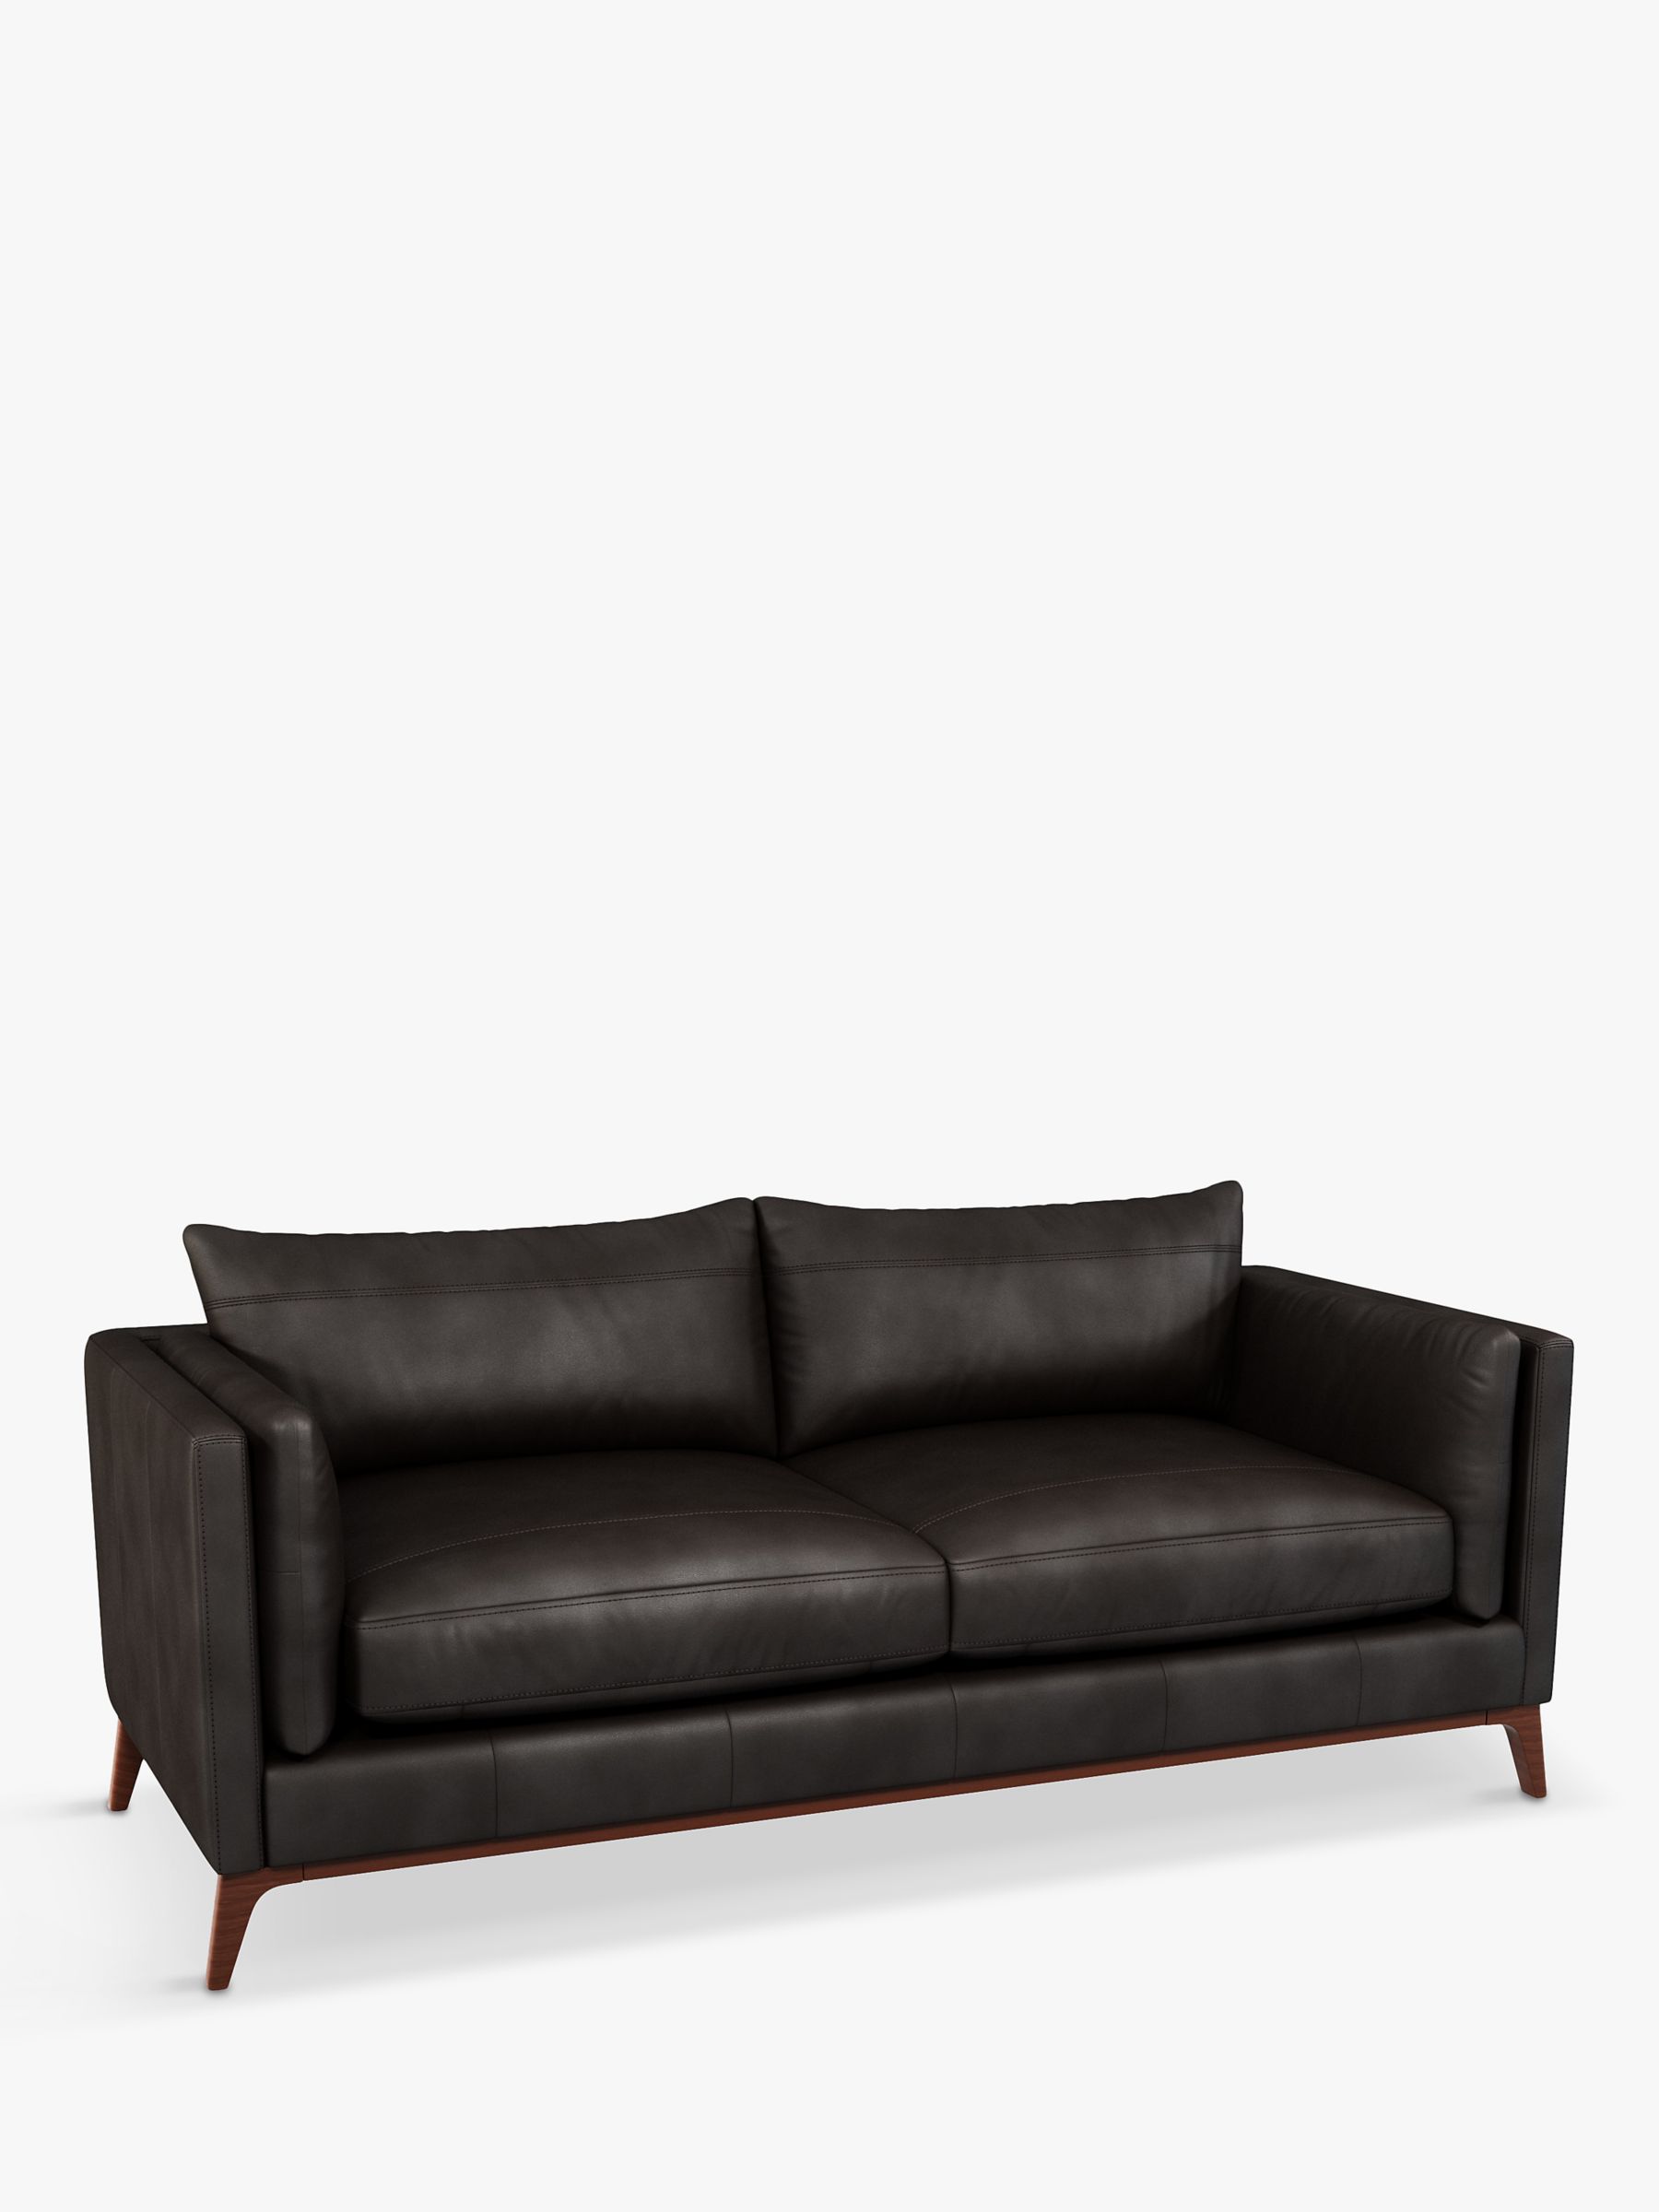 Trim Range, John Lewis Trim Large 3 Seater Leather Sofa, Dark Leg, Contempo Dark Chocolate